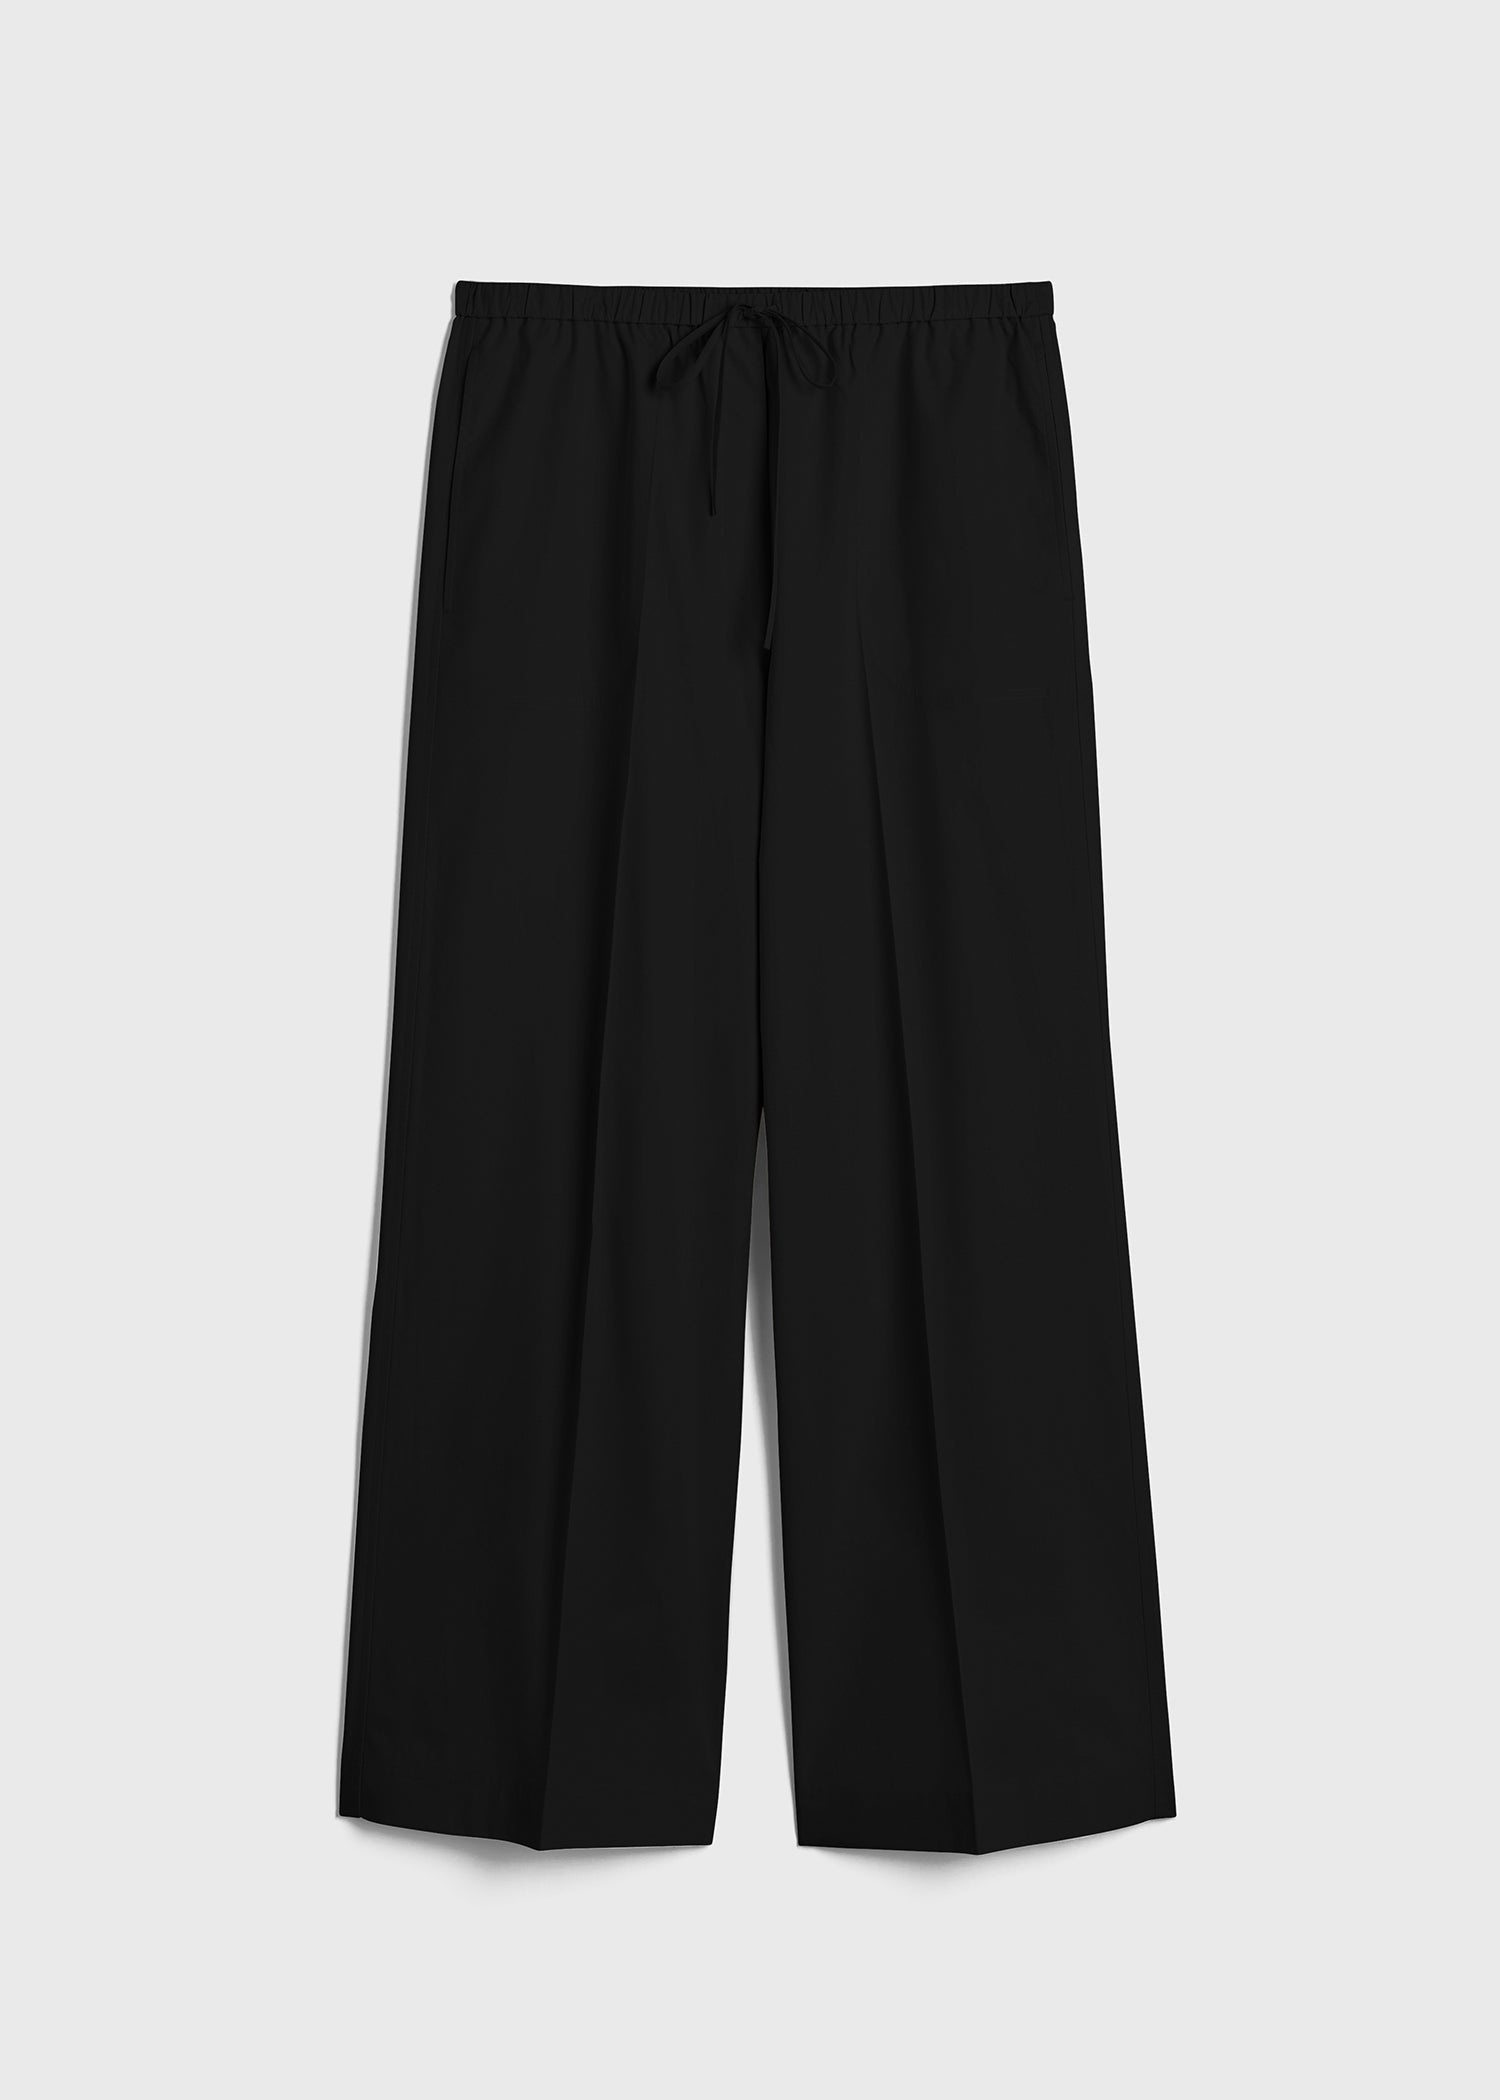 Cotton drawstring trousers black - 1